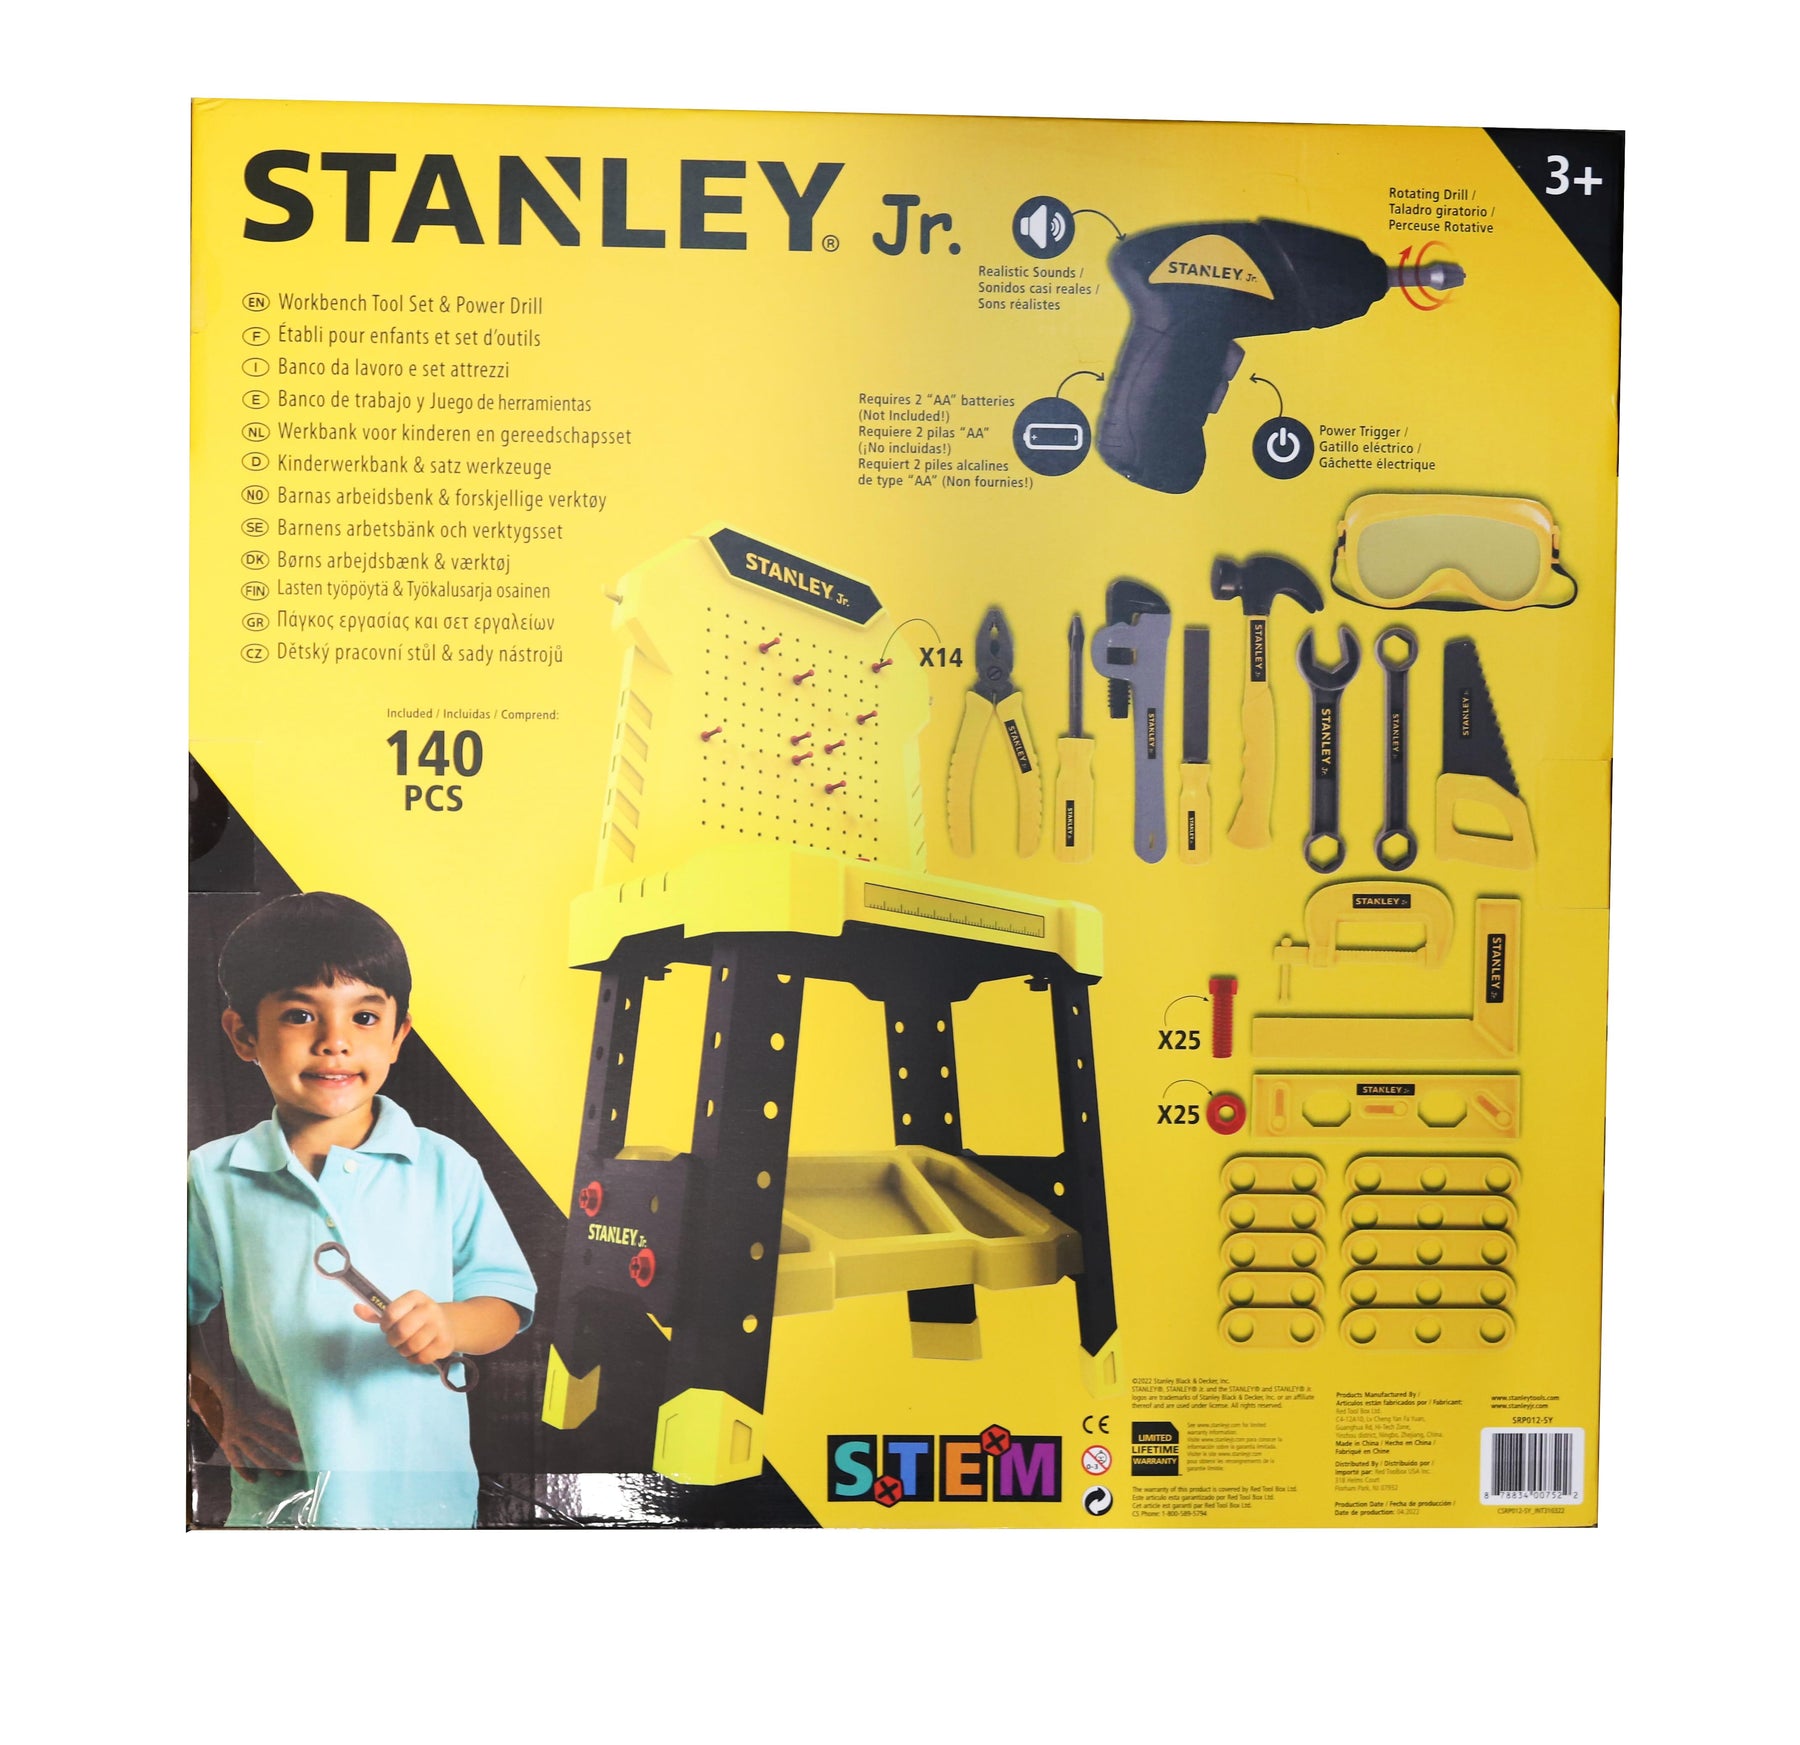 stanley hand tools logo